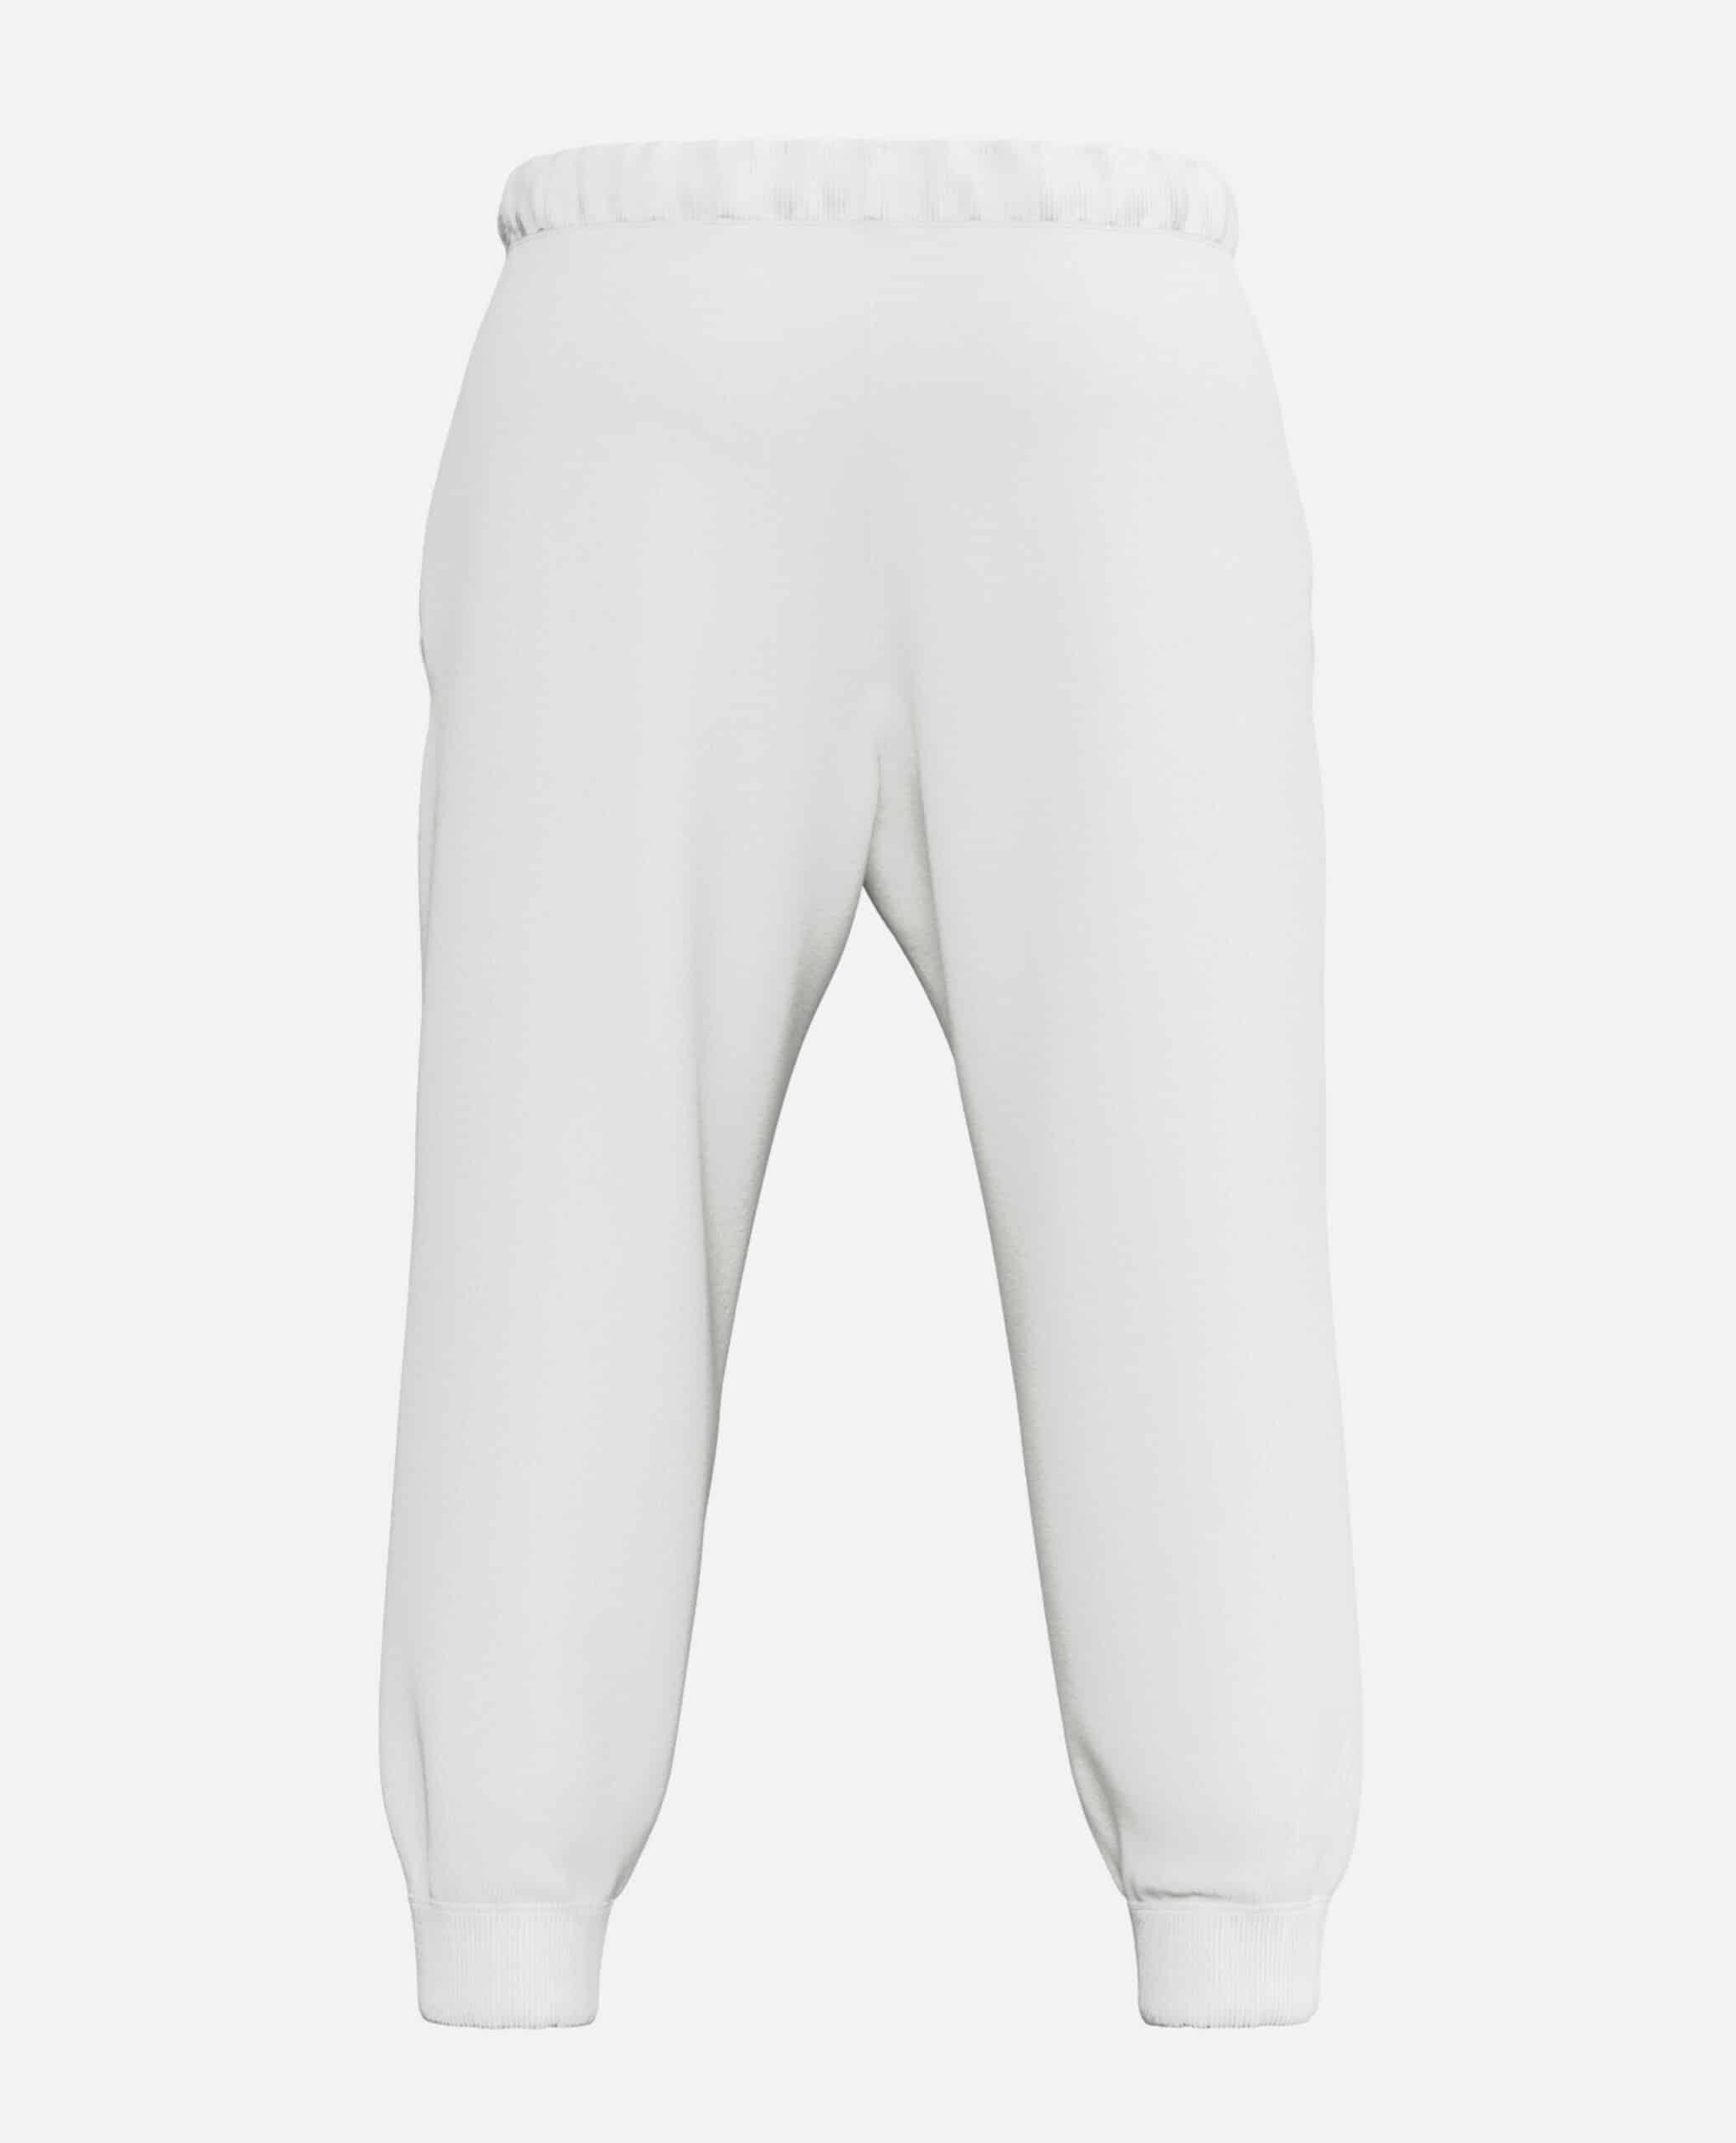 Les Vilains Original Streetwear sweatpants white back